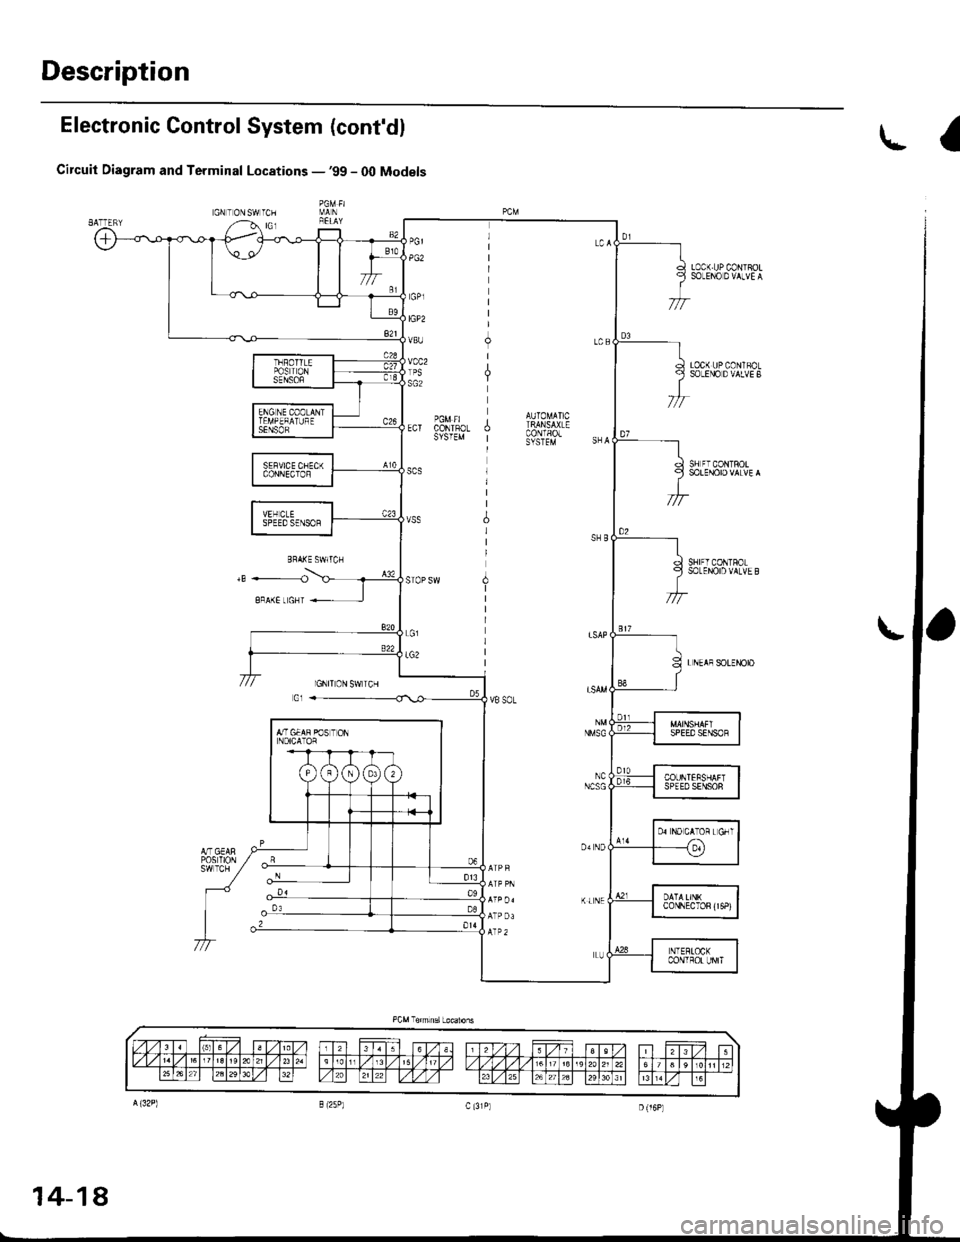 HONDA CIVIC 1996 6.G Workshop Manual Description
Electronic Control System (contdl
Circuit Diagram and Terminal Locations -99 - O0 Models
GNTONSWICH,,--b. rcj
LI
LOCK.UPCONIFOLSOLEI\Q D VALVE A
LOCK UP CONIROLSOLENODVALVEB
SH FI CONTR